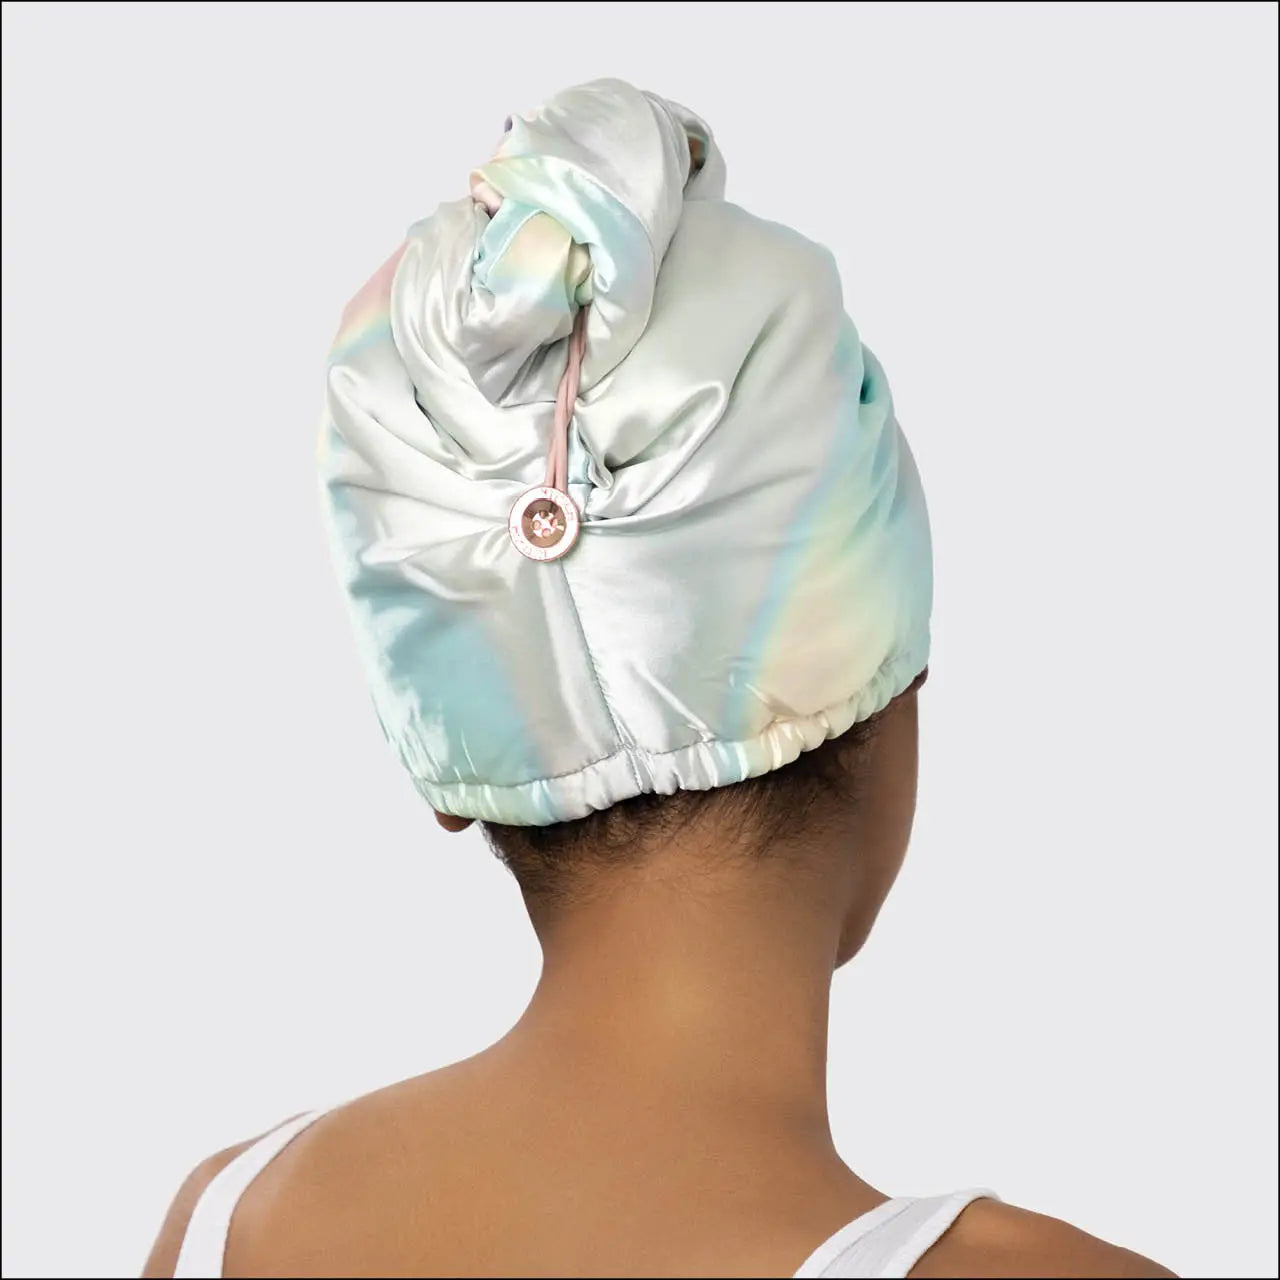 Kitsch - Satin-Wrapped Microfiber Hair Towel - Aura